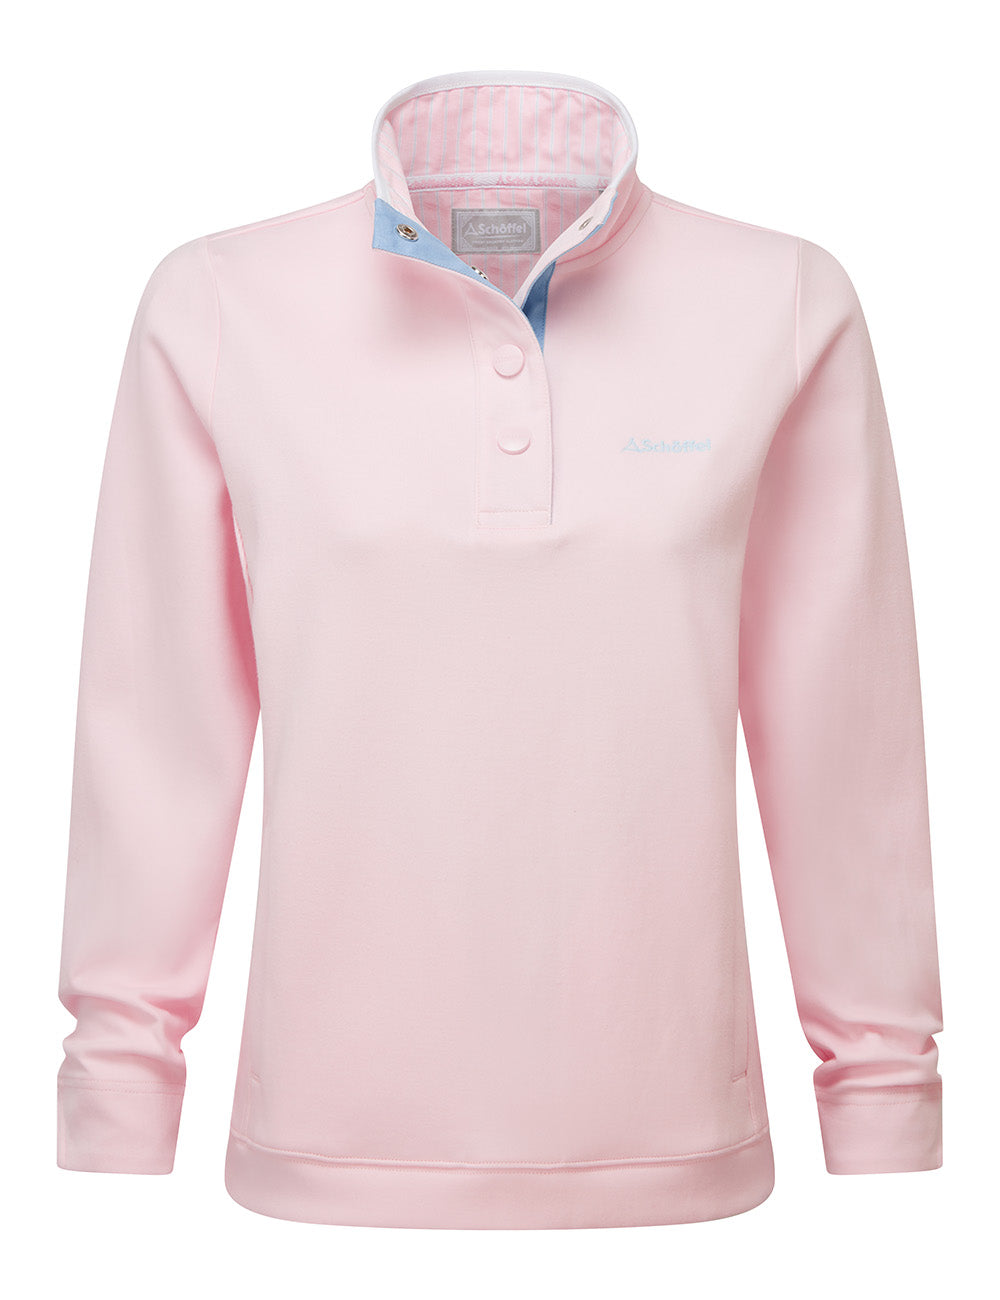 Schoffel Steephill Cove Sweatshirt - Pale Pink